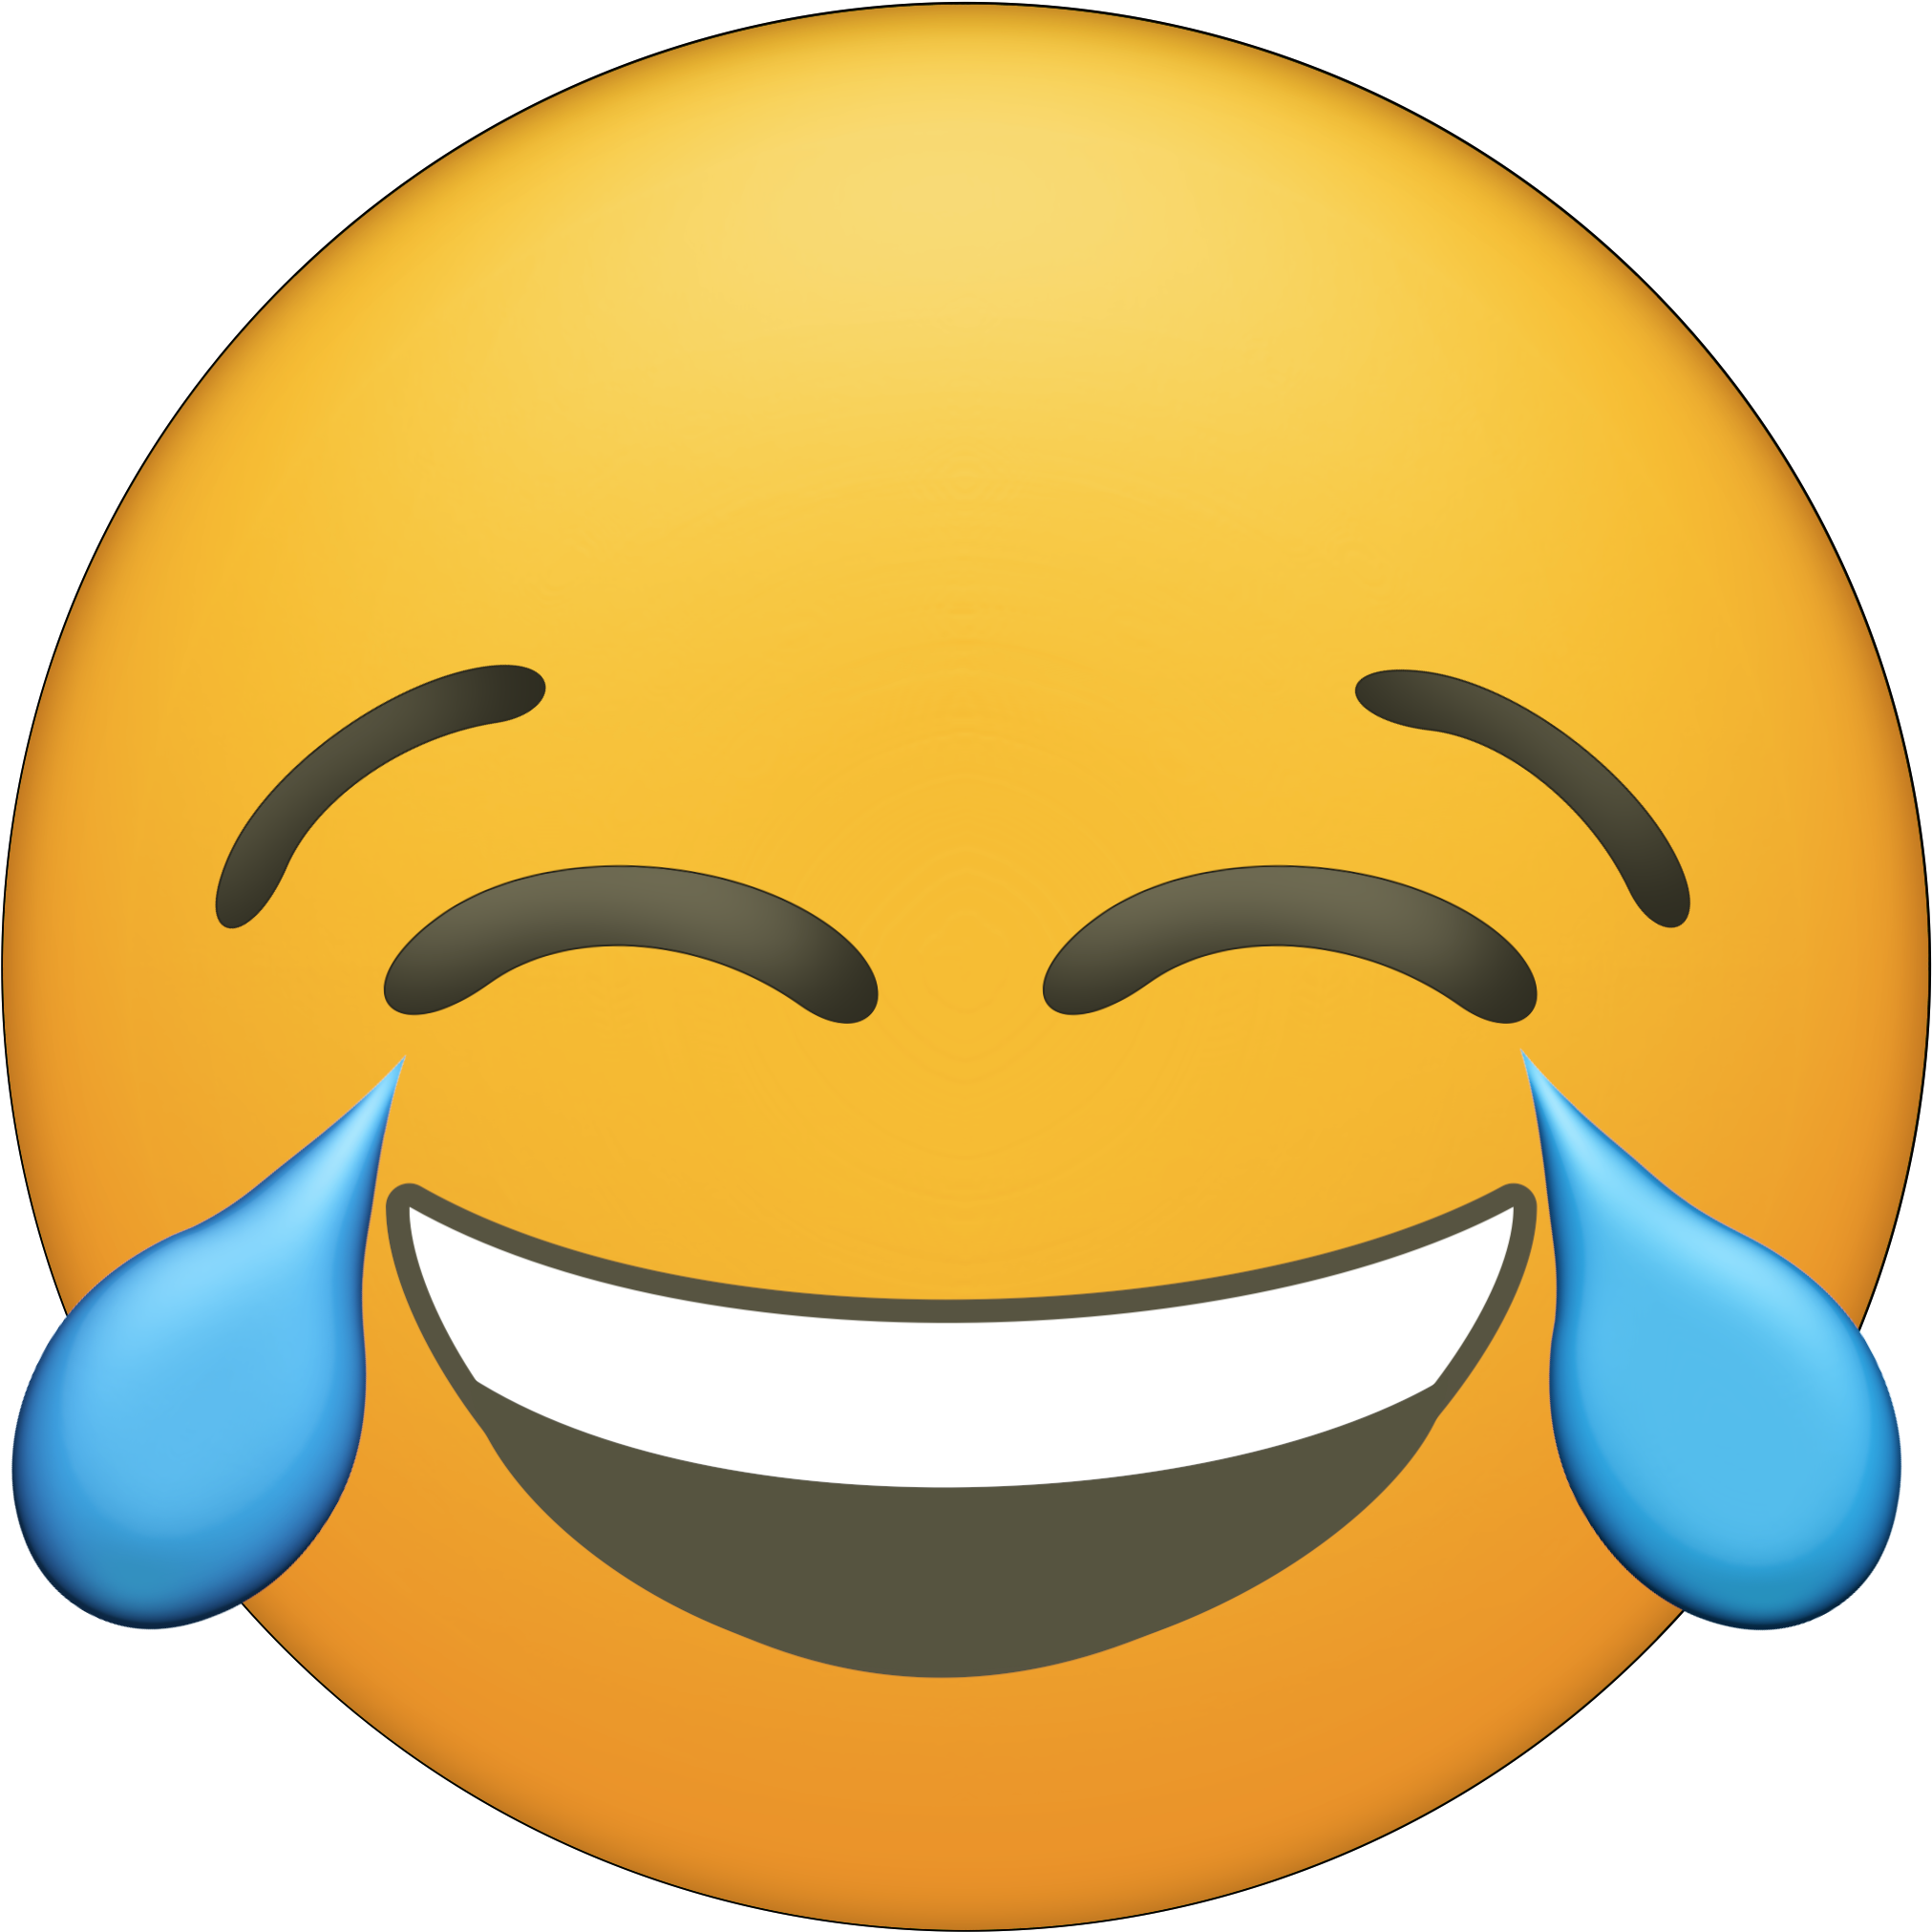 Laughing Crying Emoji PNG HD Quality